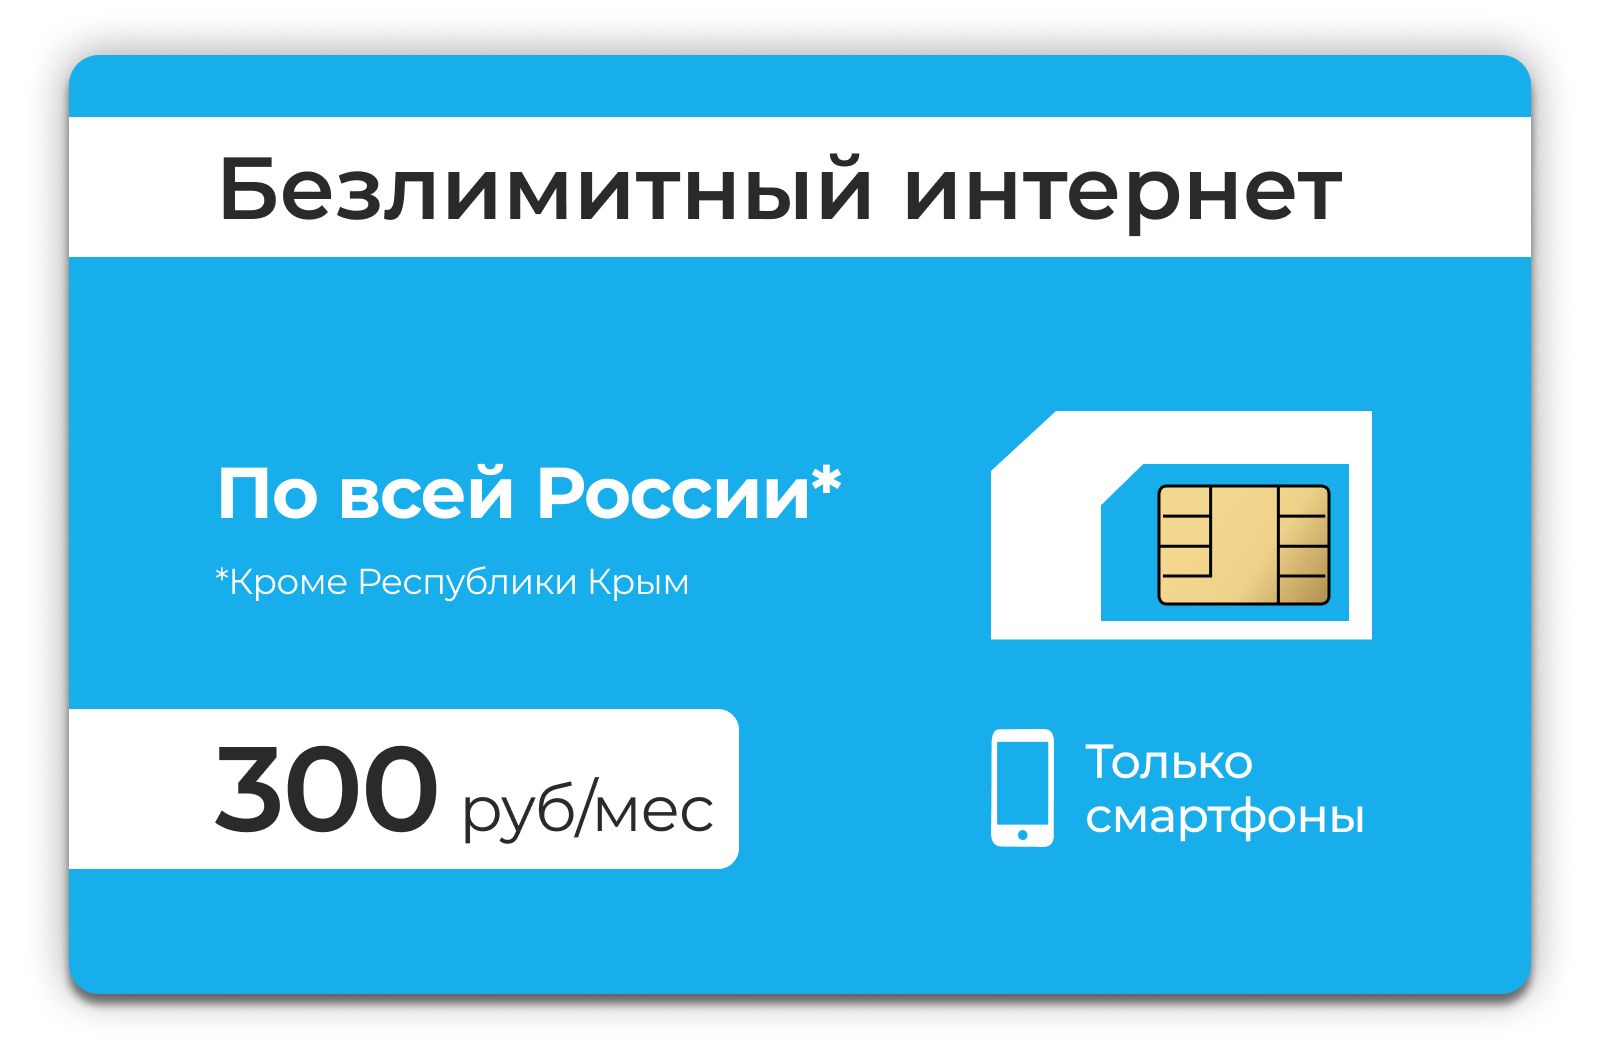 SIM-картаSIM-картаБезлимитныйинтернет3G/4Gза300рубвмесяц(ВсяРоссия)